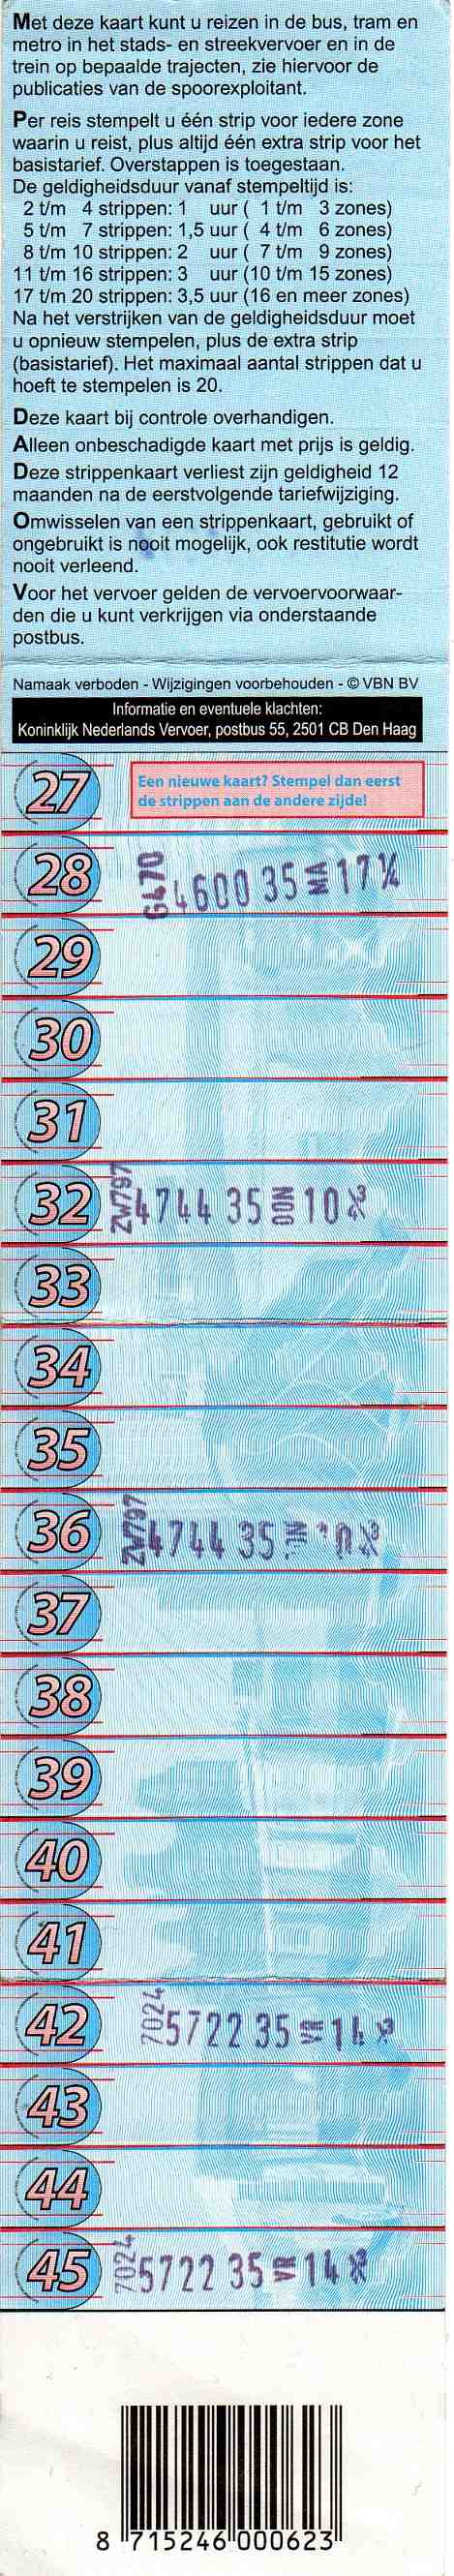 45-strip ticket (back)